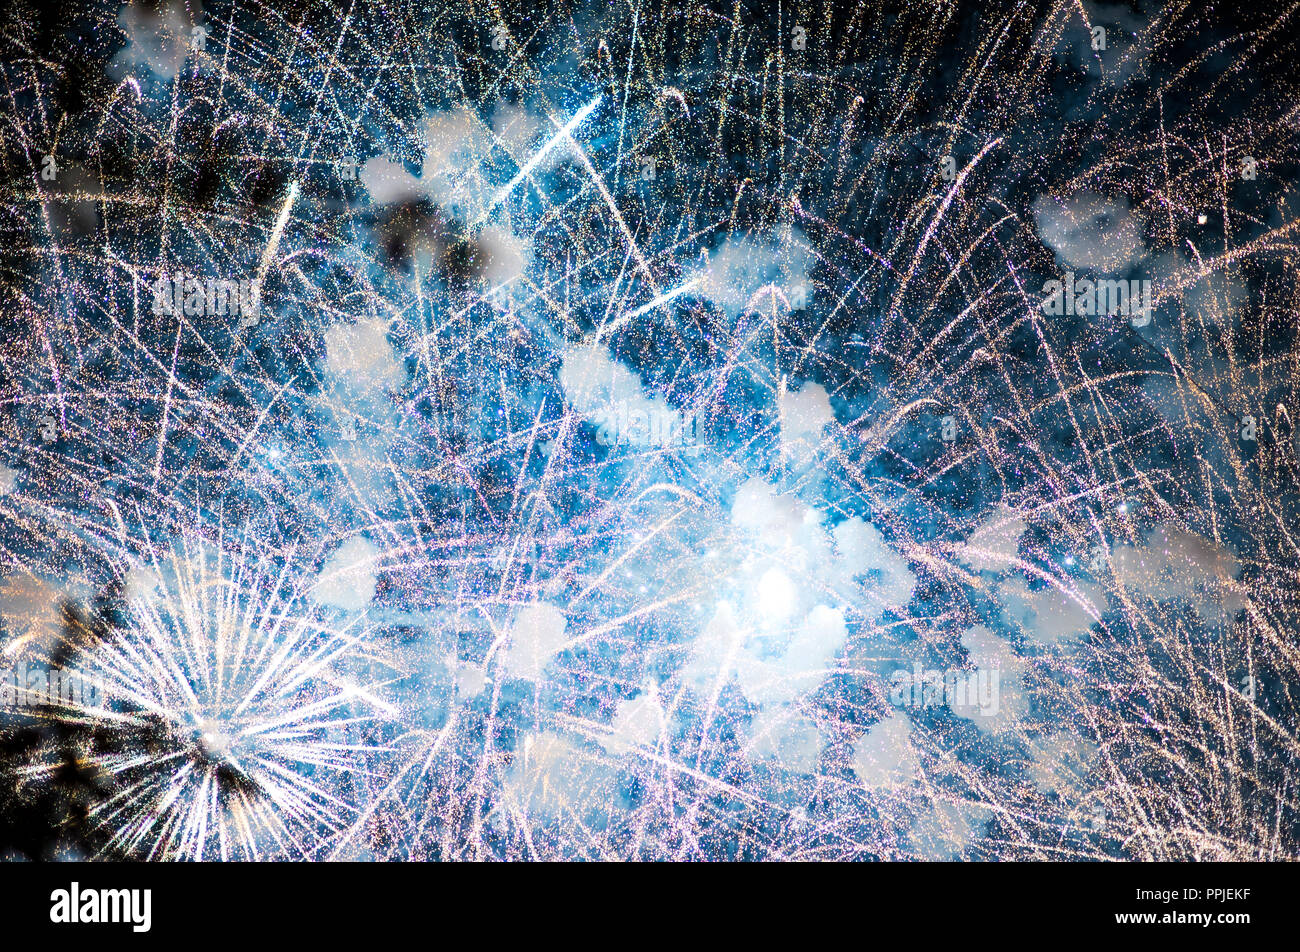 Christmas celebration neon sparkling explosion of fireworks Stock Photo